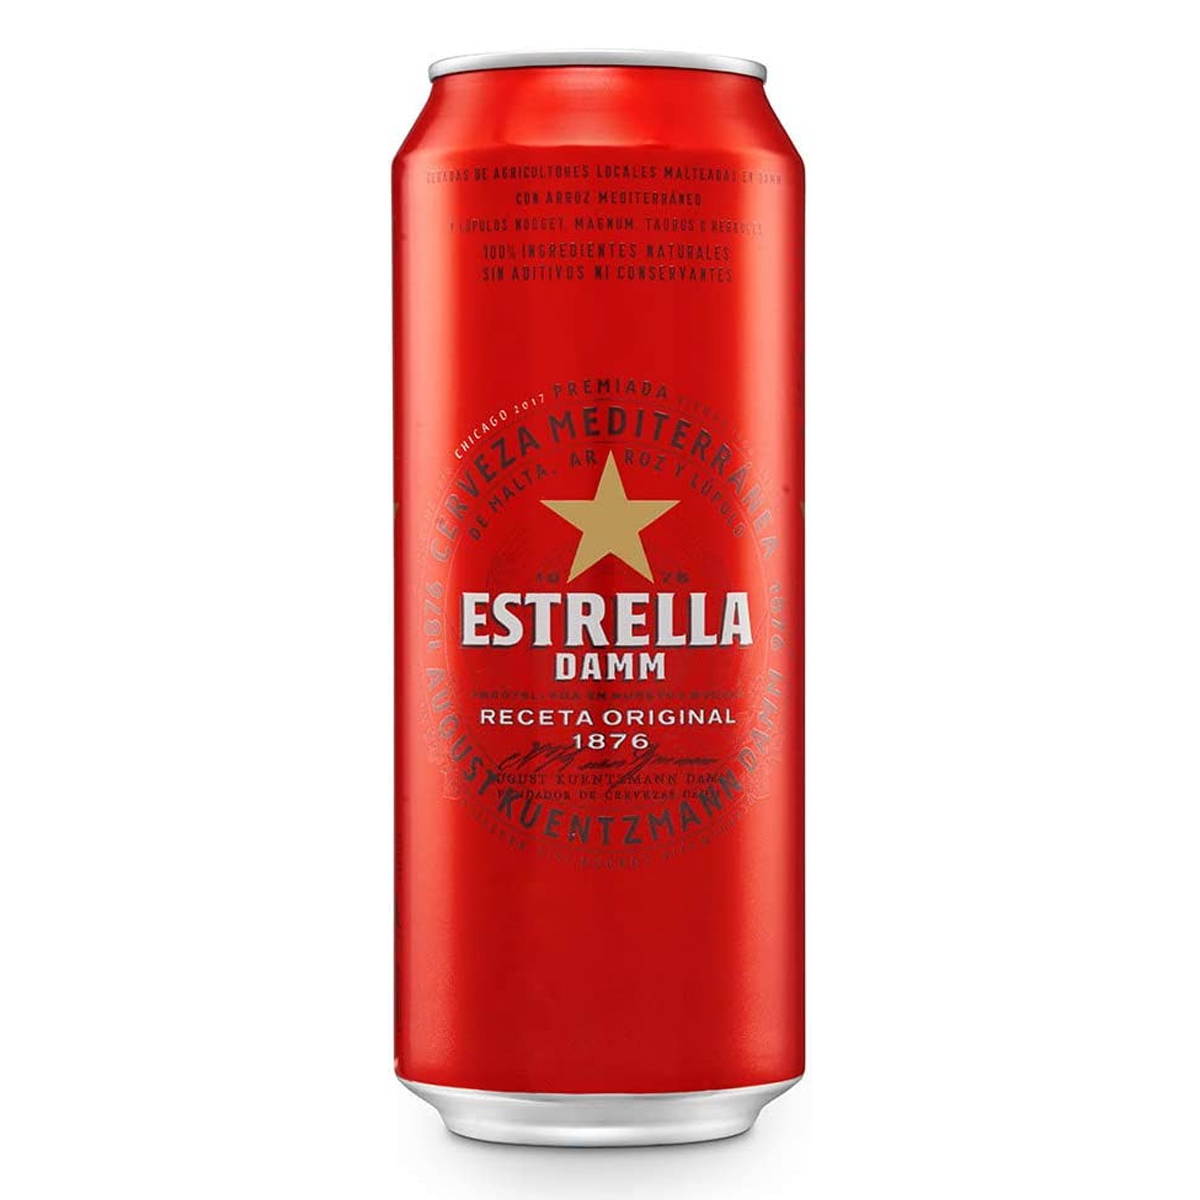 50cl Estrella Damm beer can